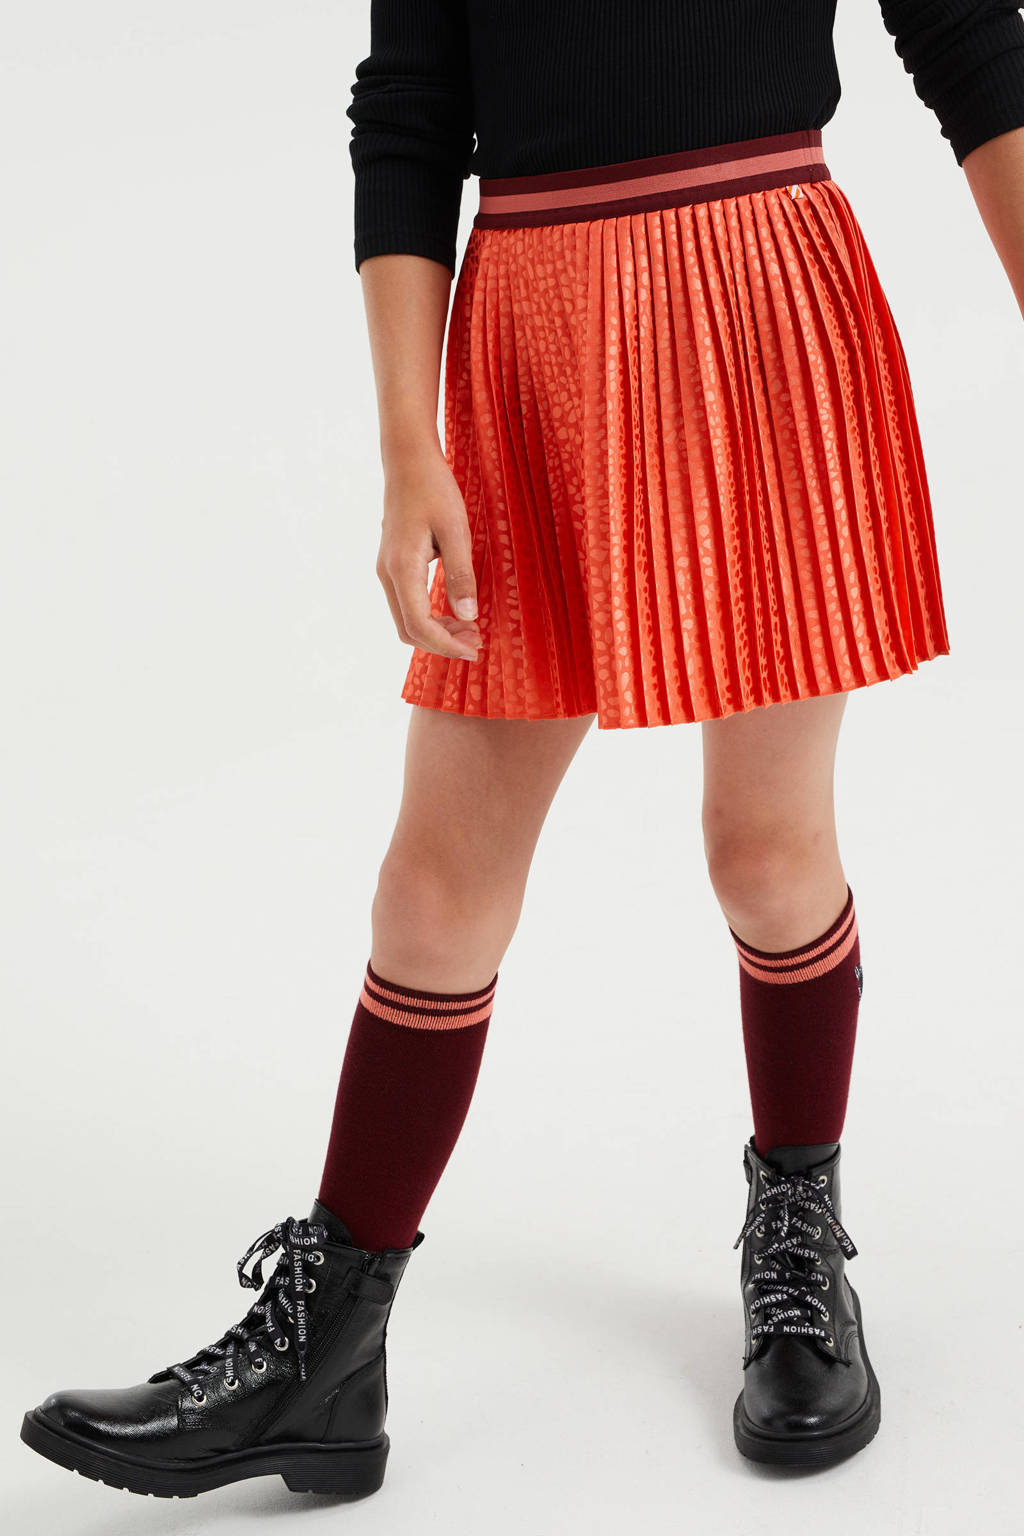 Oranje meisjes WE Fashion rok van polyester met all over print, elastische tailleband en plissé details